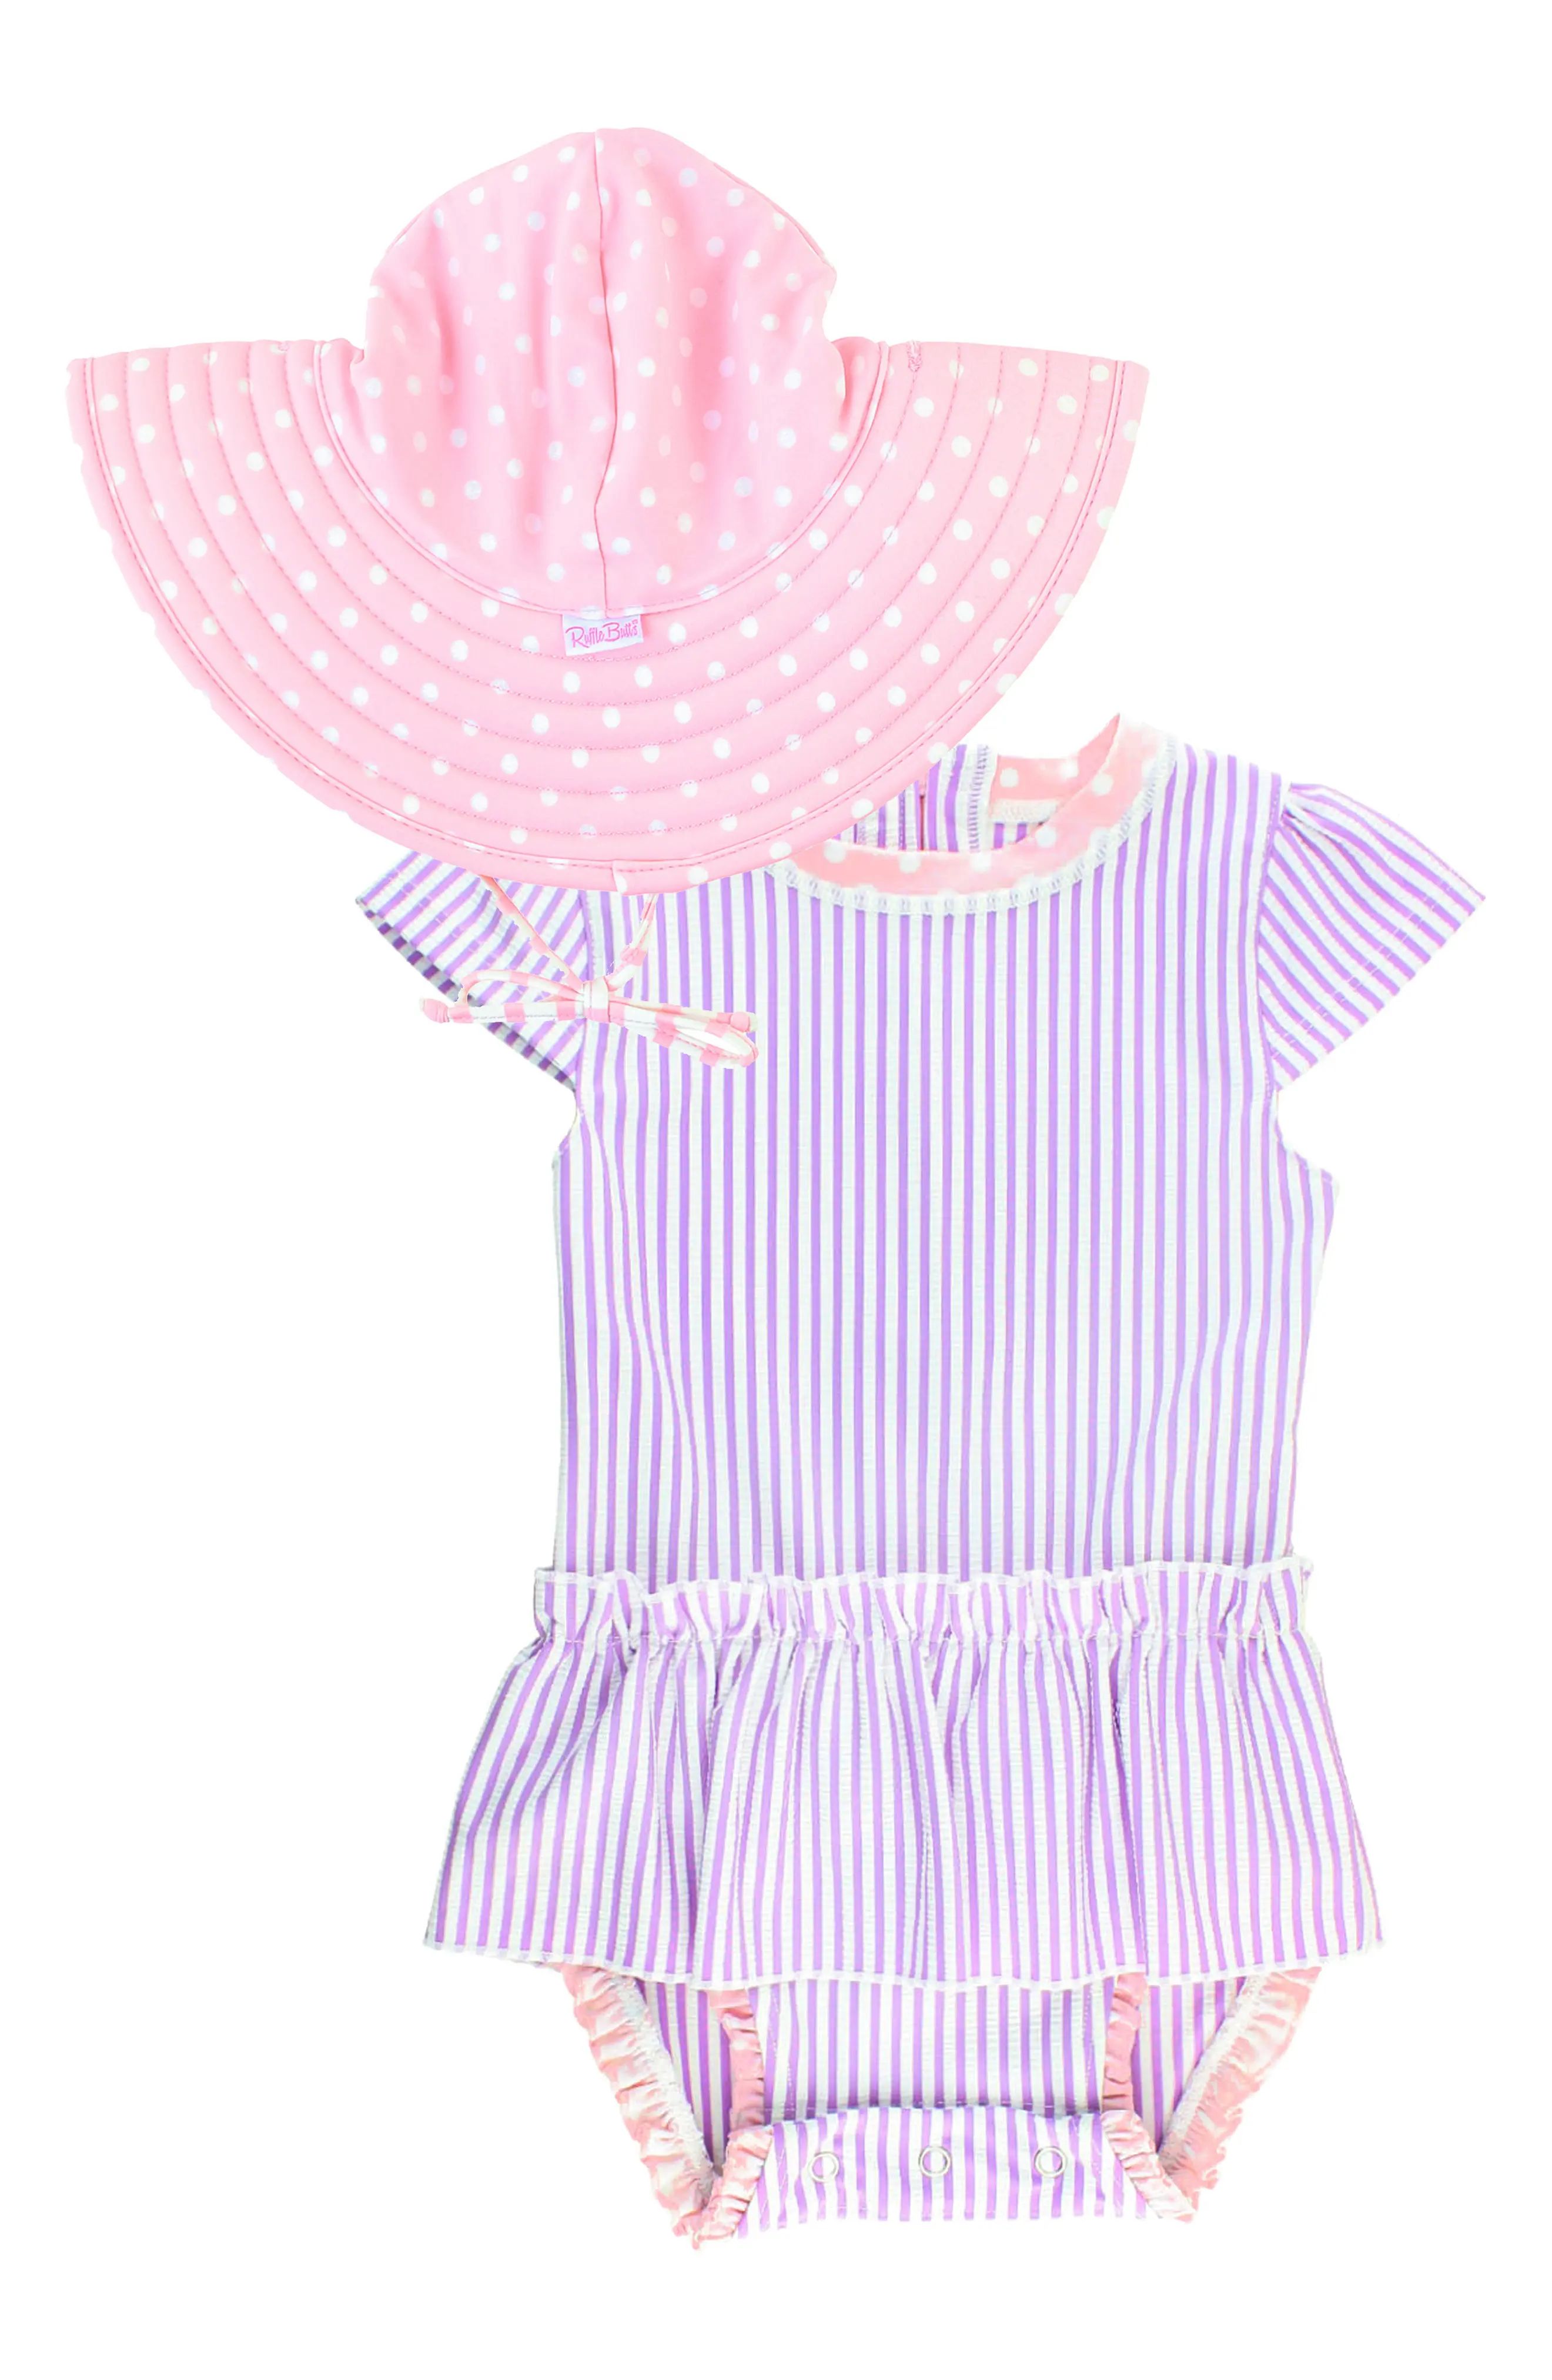 Baby Girl RuffleButts Clothing | Nordstrom